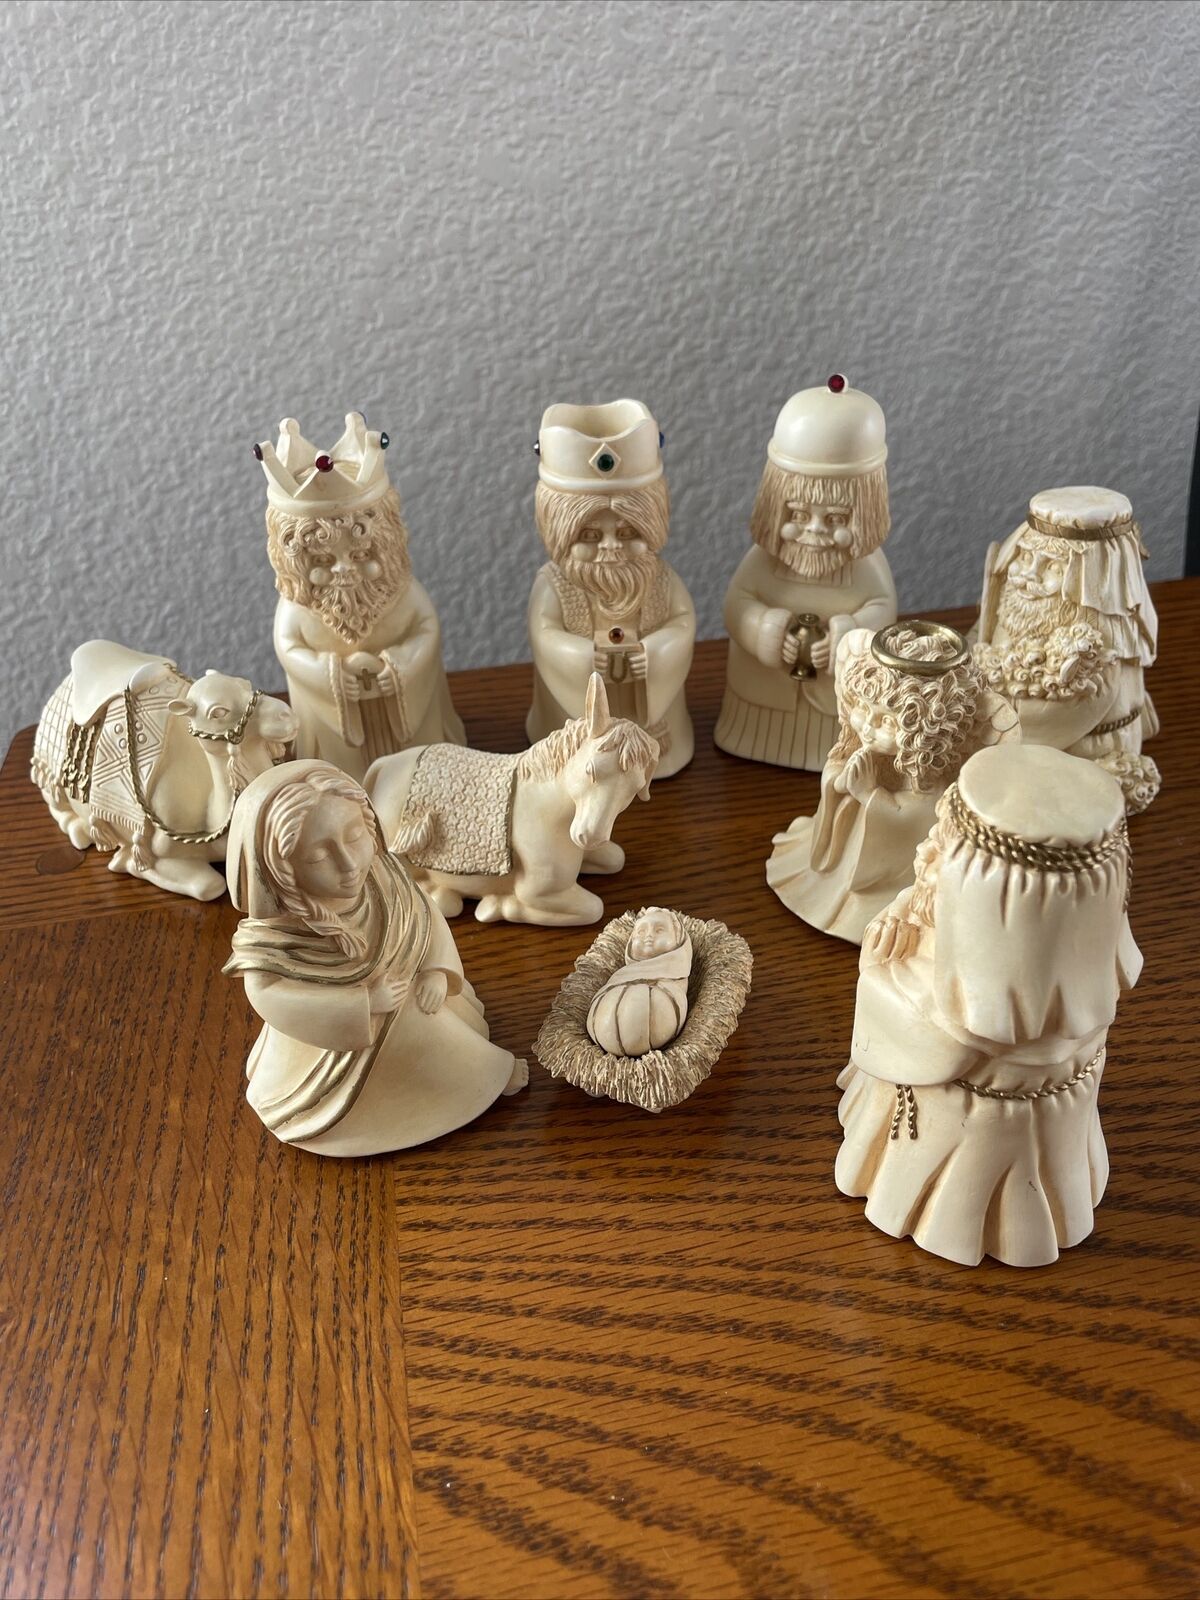 10 Pc Nativity Set Ivory Color Resin Figures by Tidings of Love, artist Jane VTG